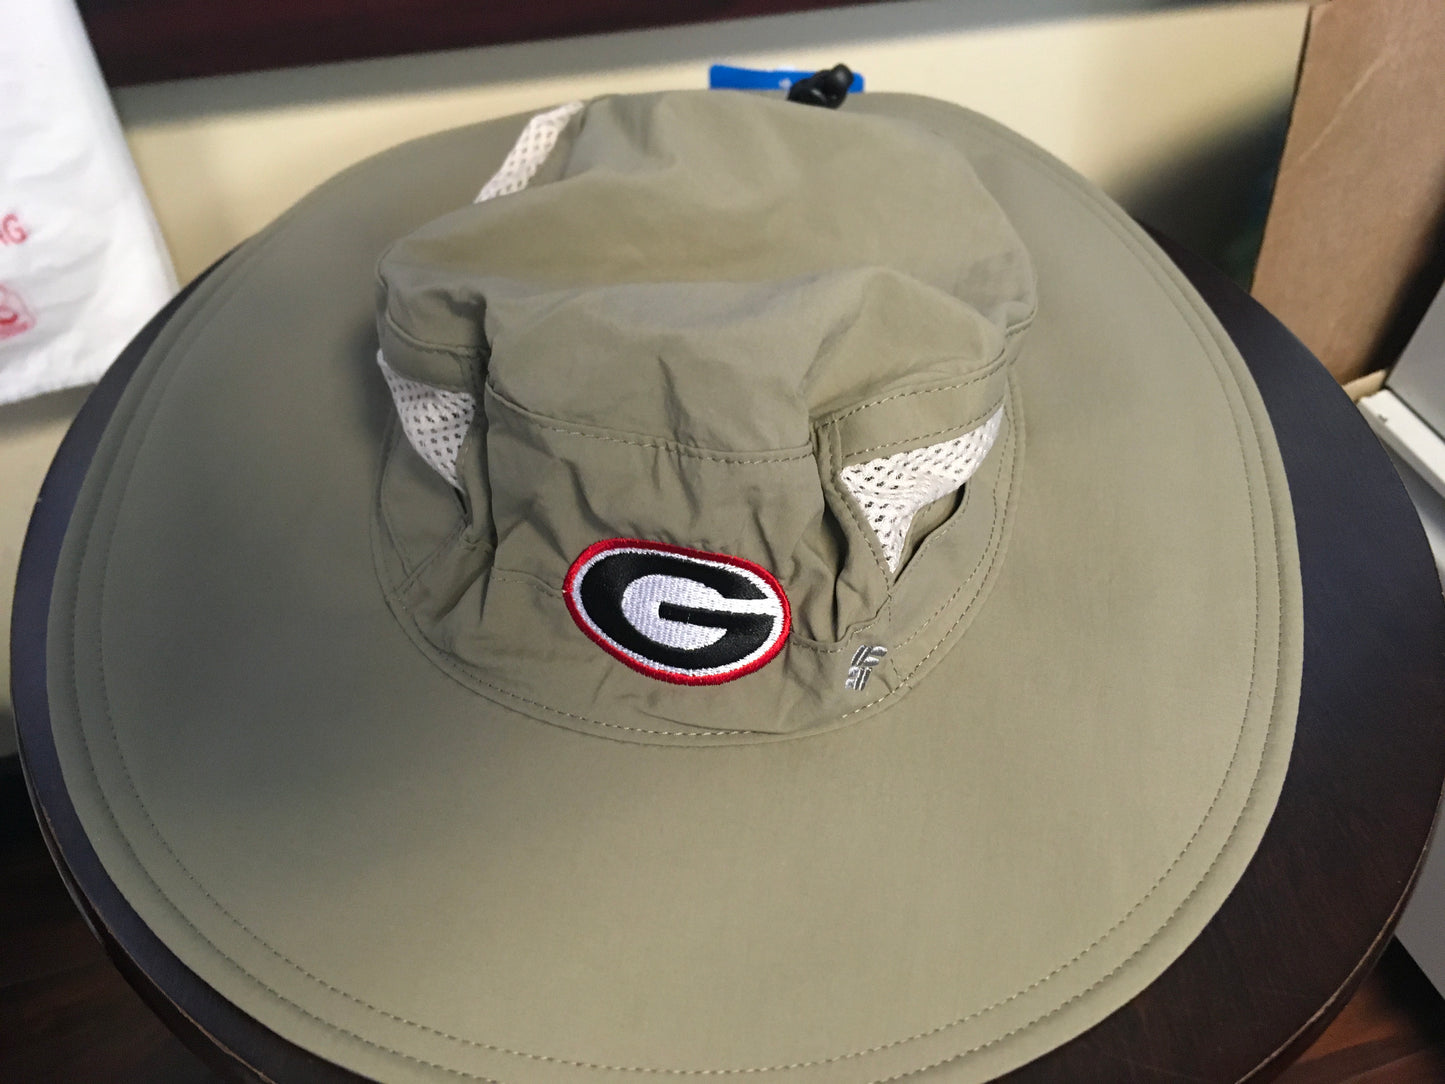 UGA Bucket/Fishing Hat